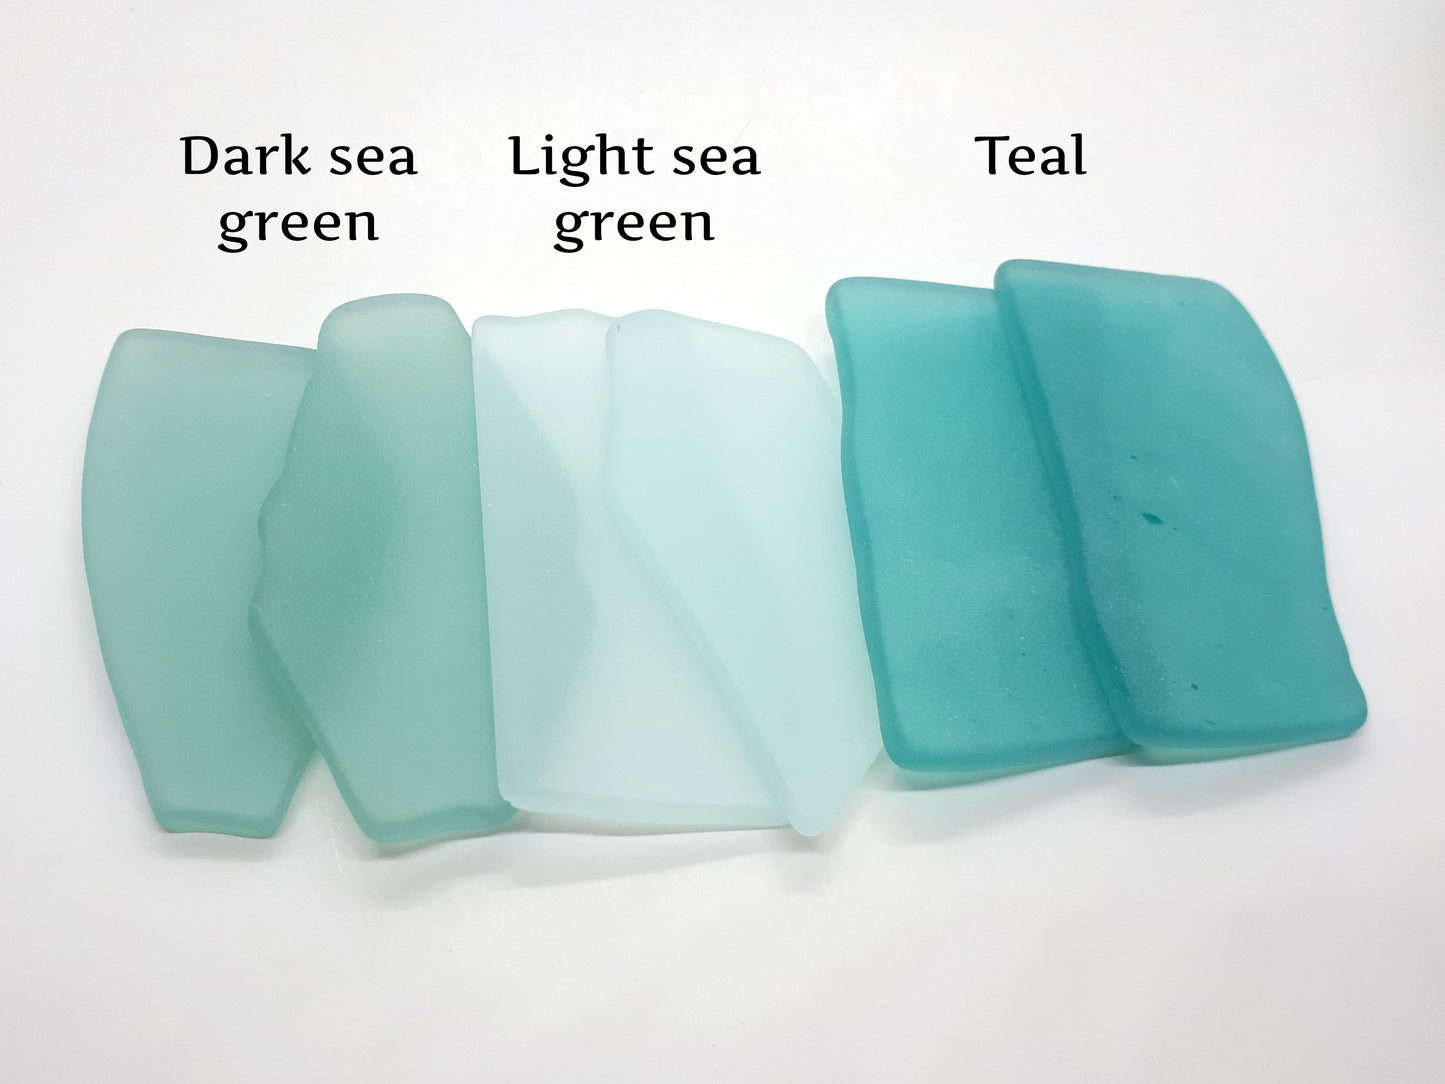 10 Pounds of Sea Glass - Green mix